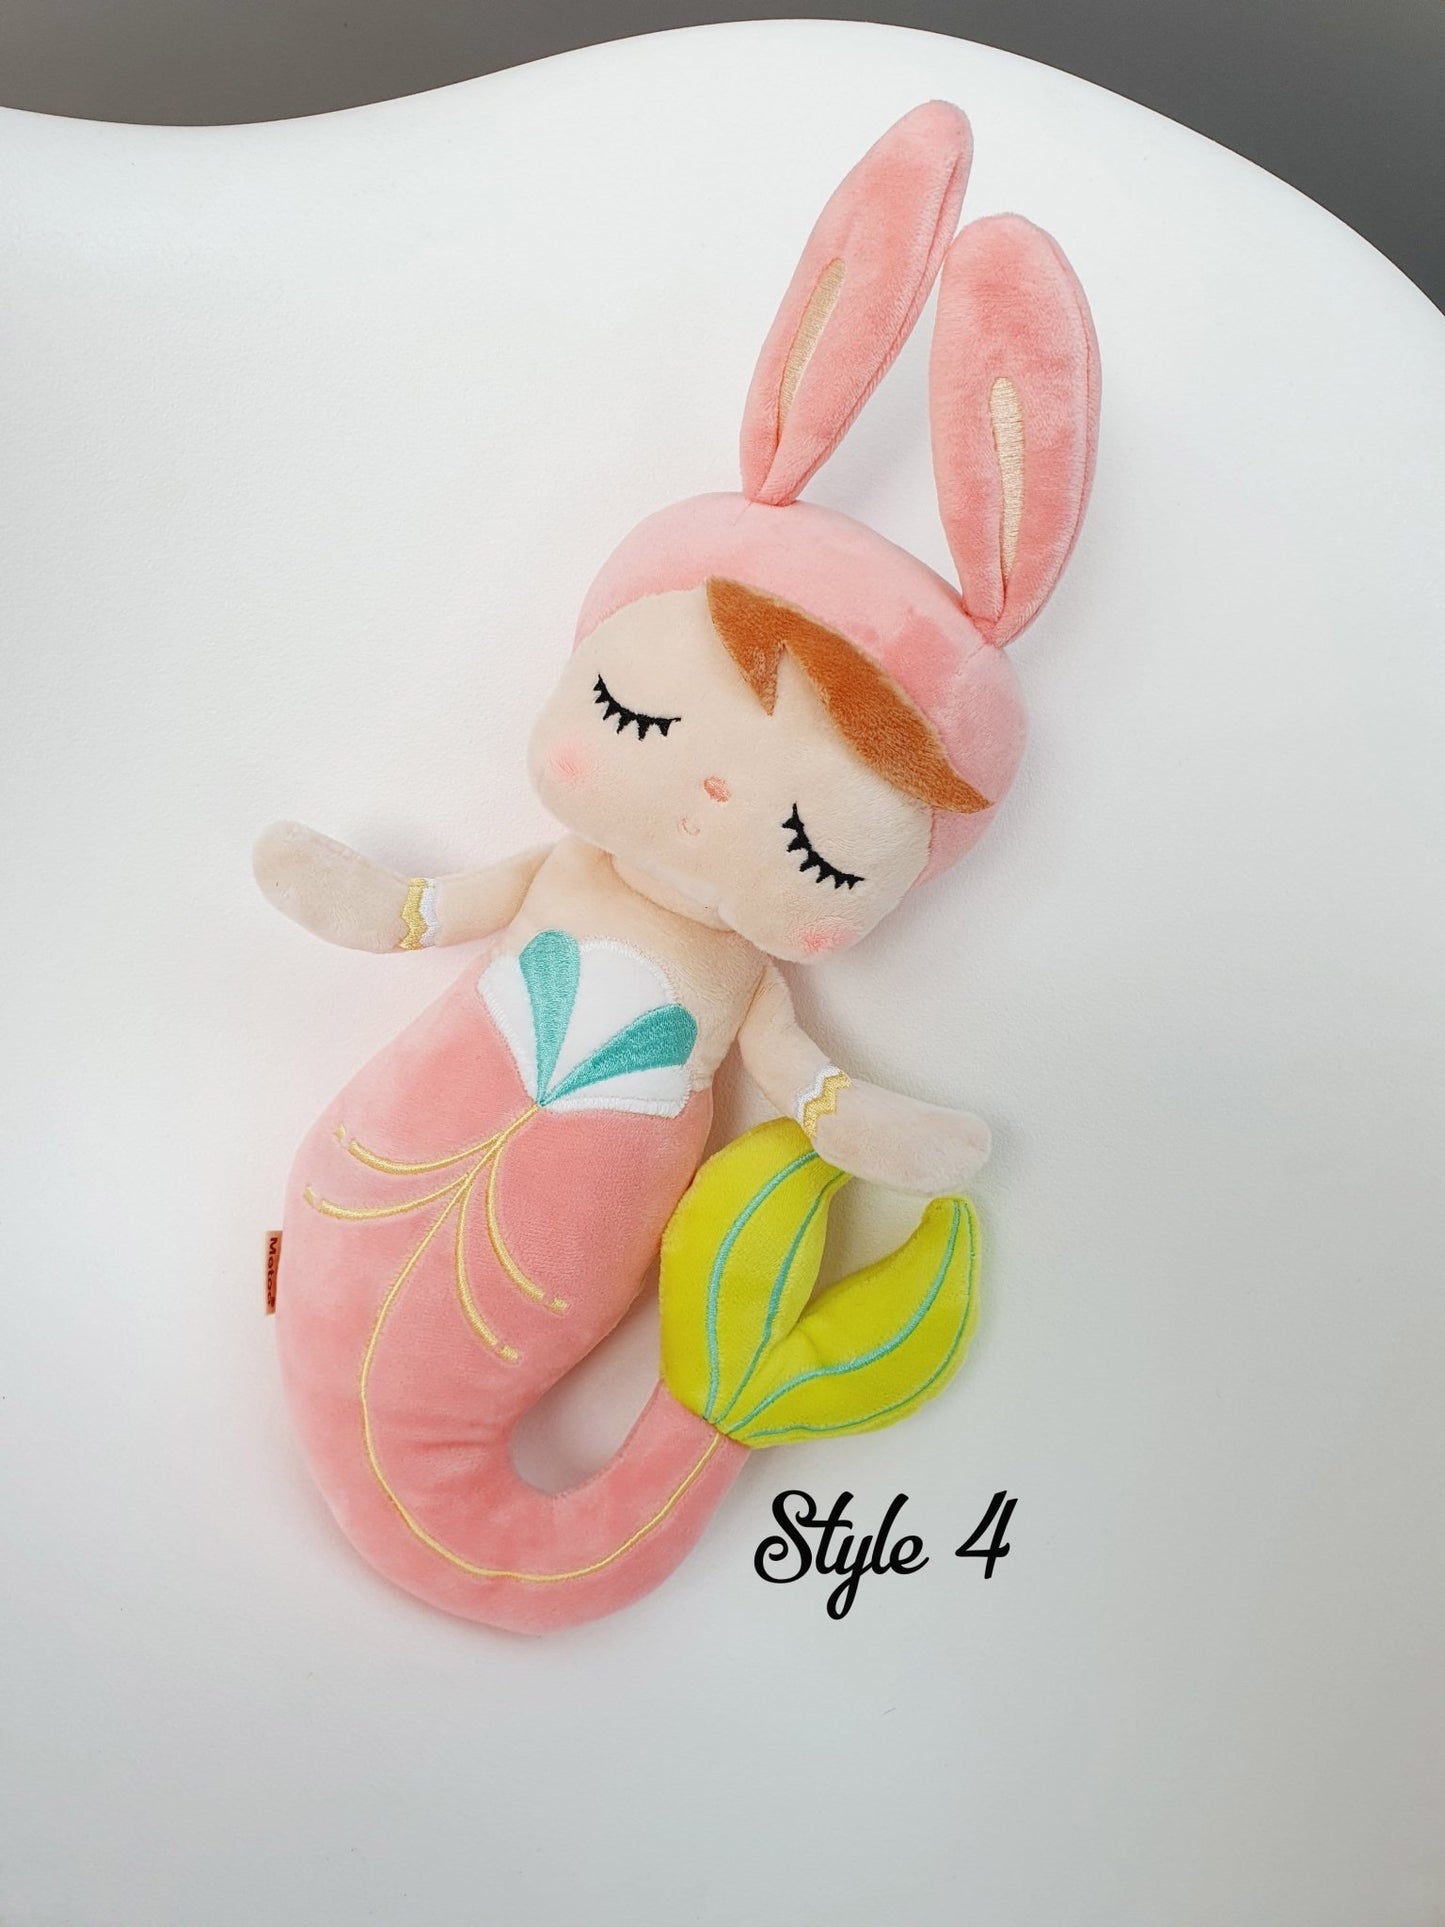 Personalised Mermaid Metoo Soft Doll from KiddioKiddioSoft Toys